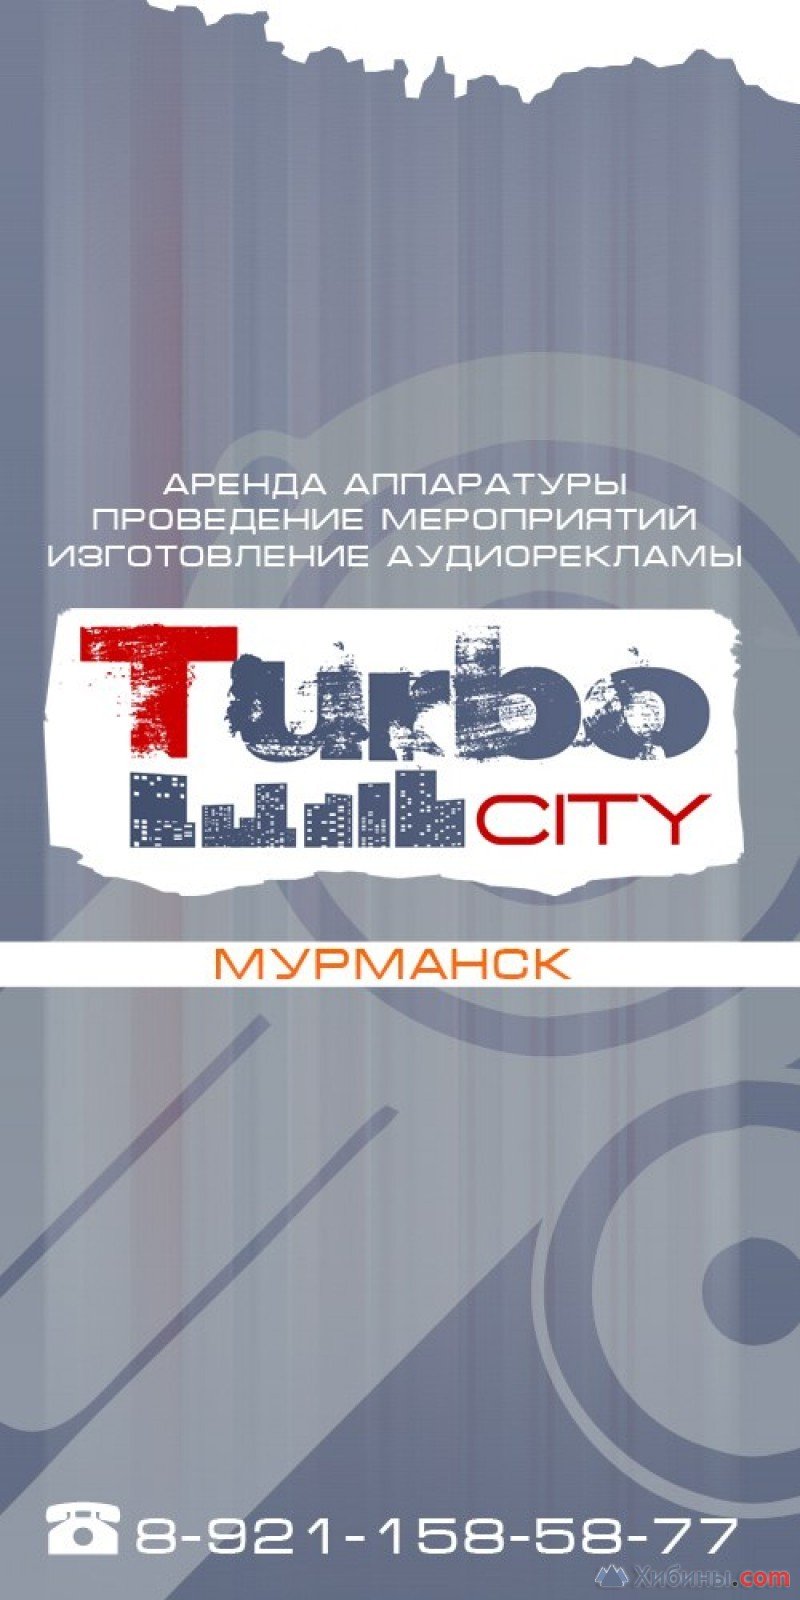 Фотография Turbo City Мурманск